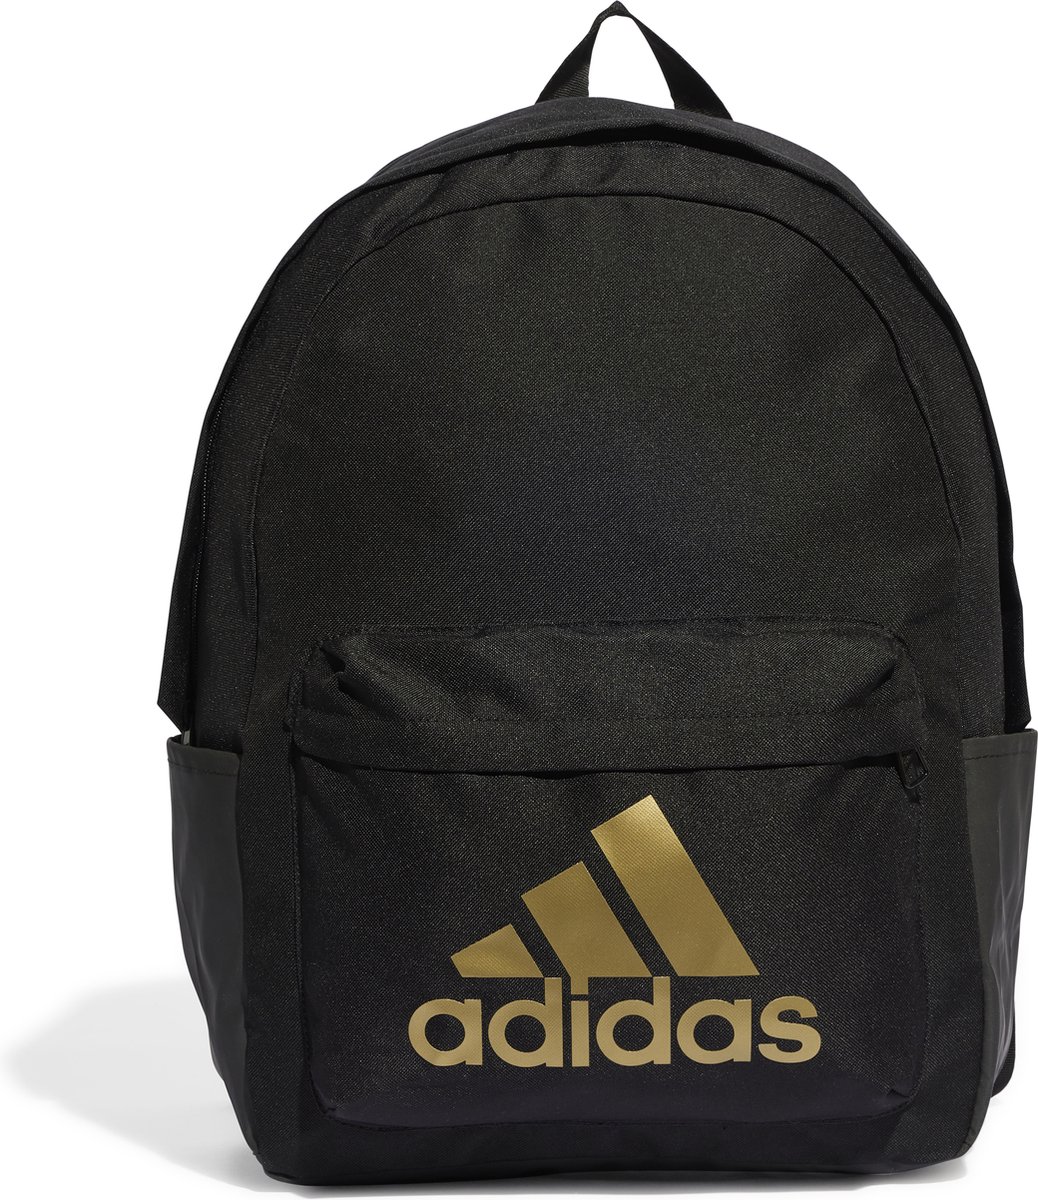 Adidas rugzak logo zwart/goud 44 cm